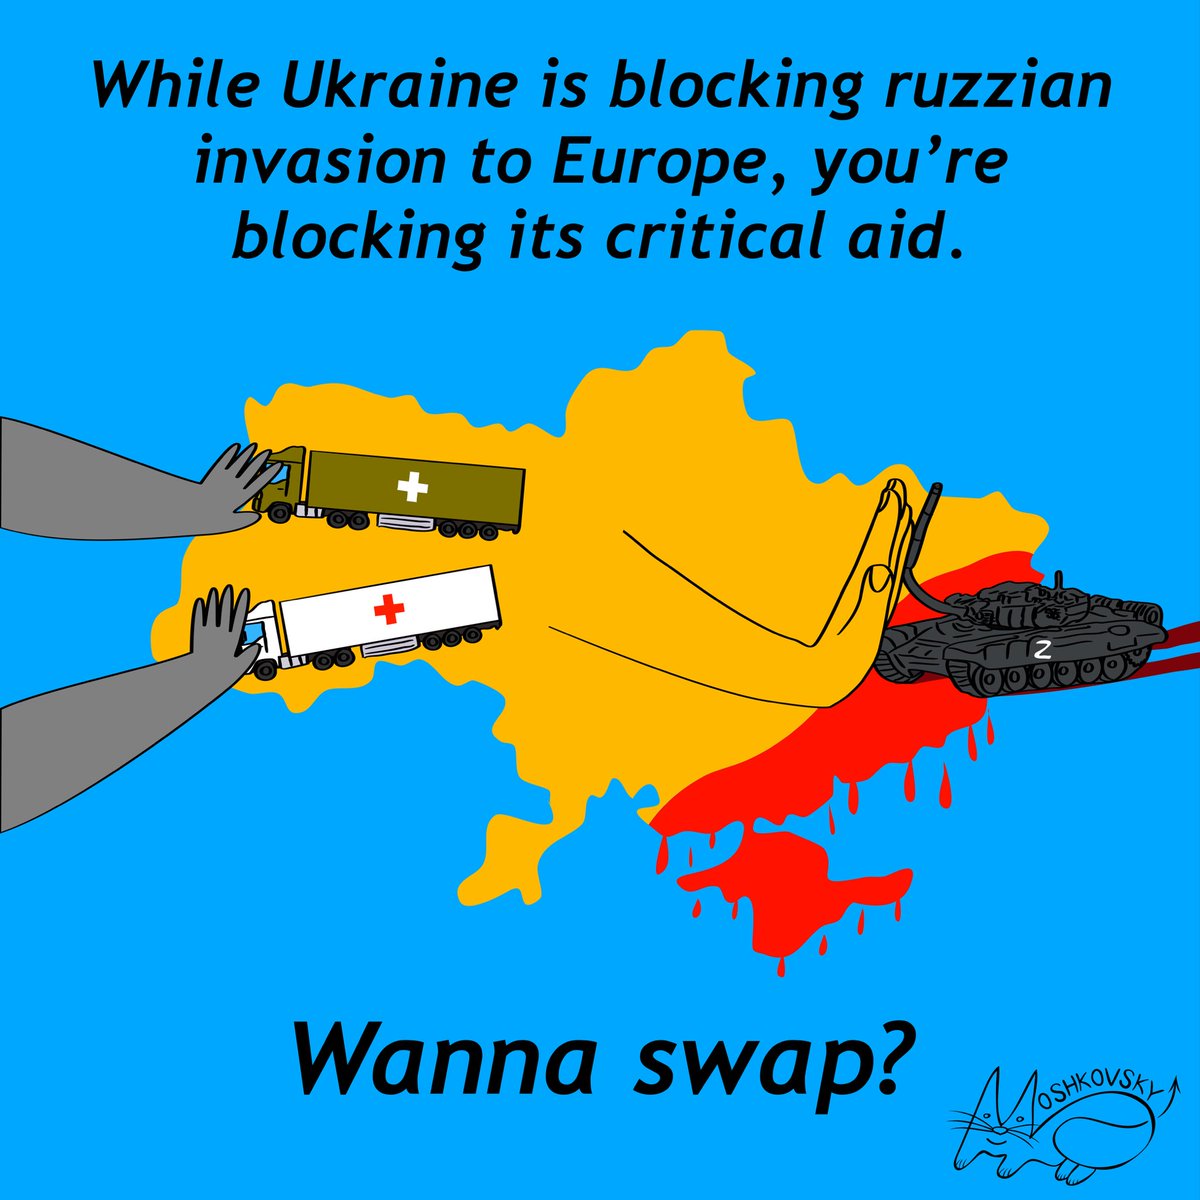 Як же вони заїбали!

We’re so f…g tired of it!

#wannaswap #whileUkraineisblockingruzzianinvasion #Ukraineisblockinginvasion #stopblockingUkraine #armUkraine #stopblockingaidforUkraine #aidforUkraine #helpUkraine #moshkovsky #moshkovsky_art #poplava_art